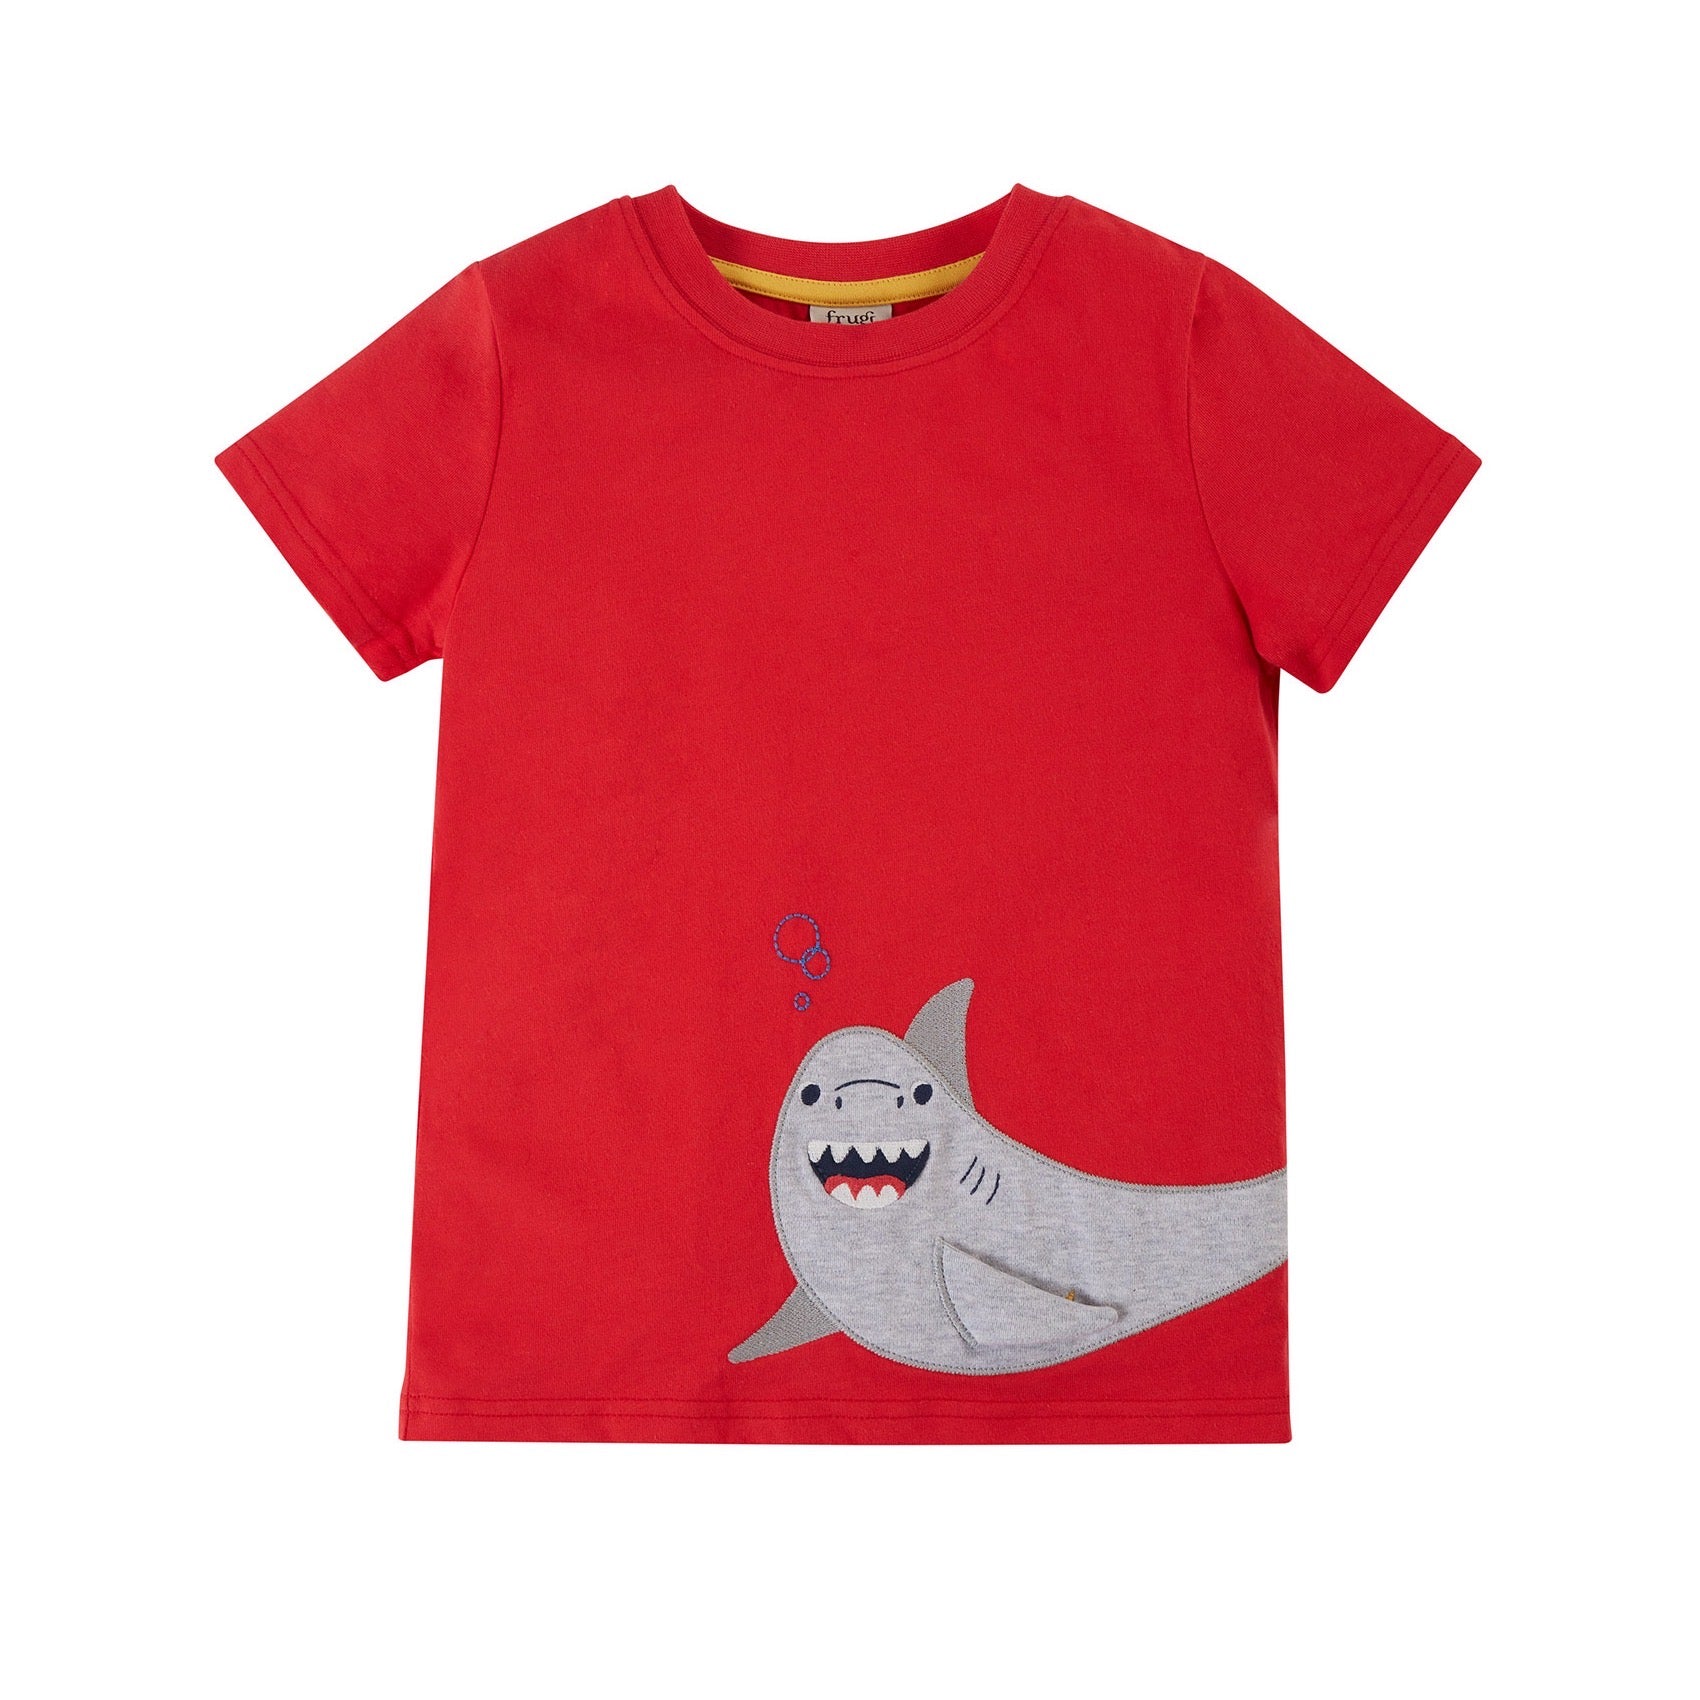 Frugi Rai Applique T-Shirt Red Shark Clothing 2-3YRS / Red,3-4YRS / Red,4-5YRS / Red,5-6YRS / Red,6-7YRS / Red,7-8YRS / Red,8-9YRS / Red